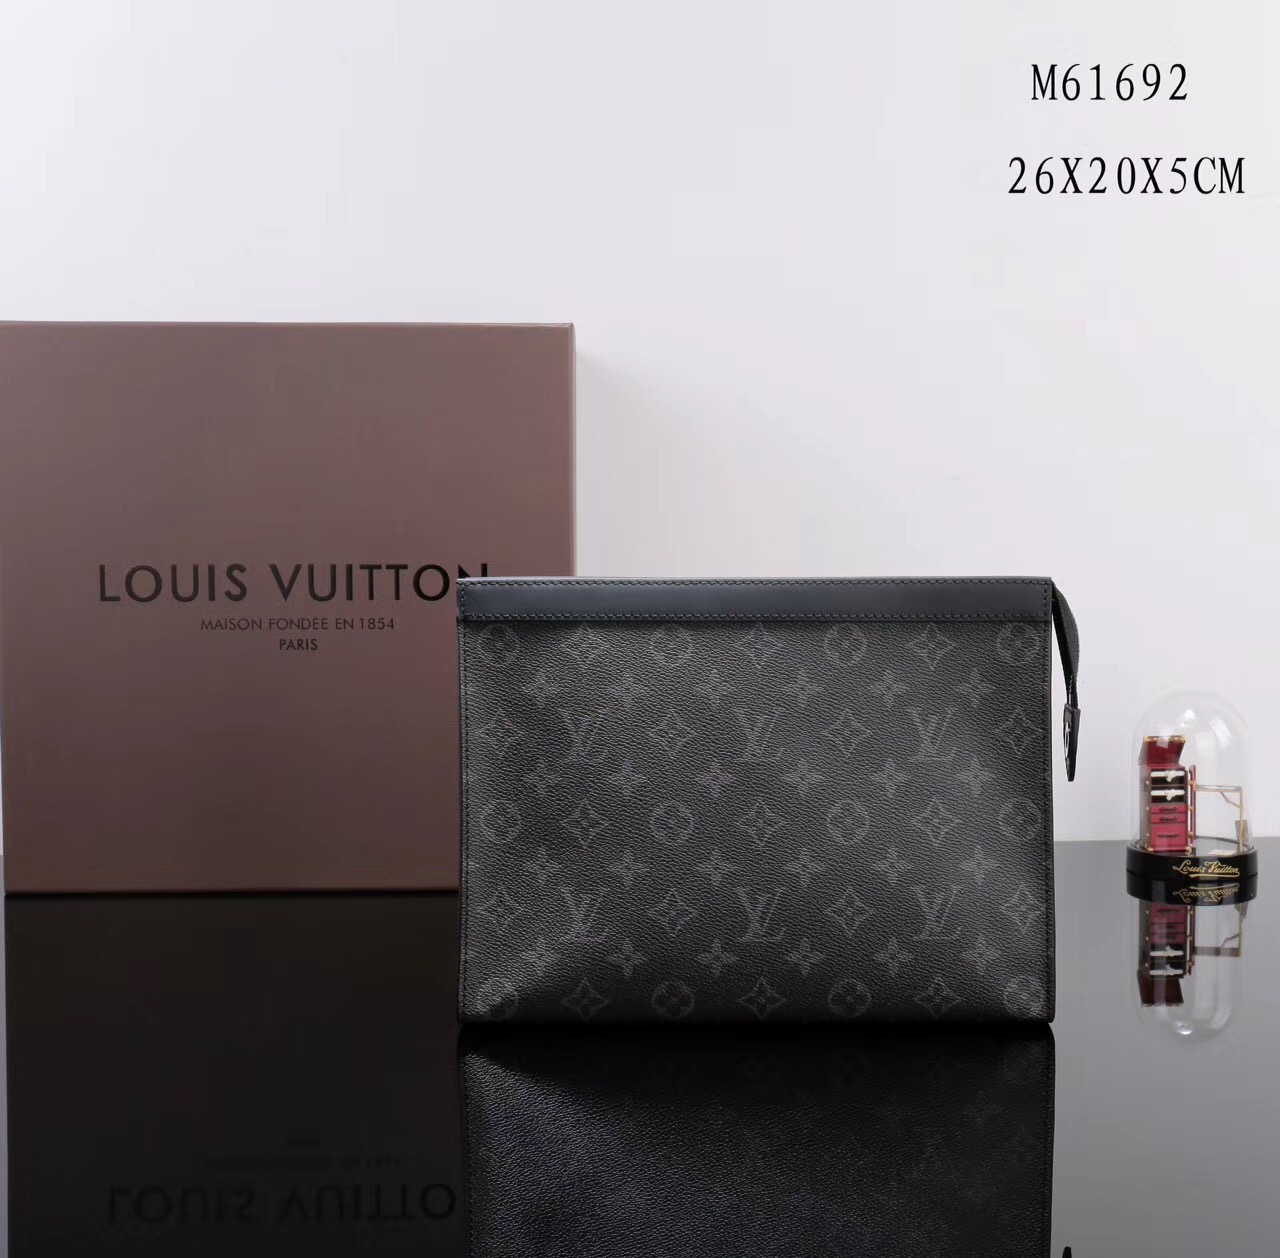 Mens Louis Vuitton Clutch Bag Germany, SAVE 44% 